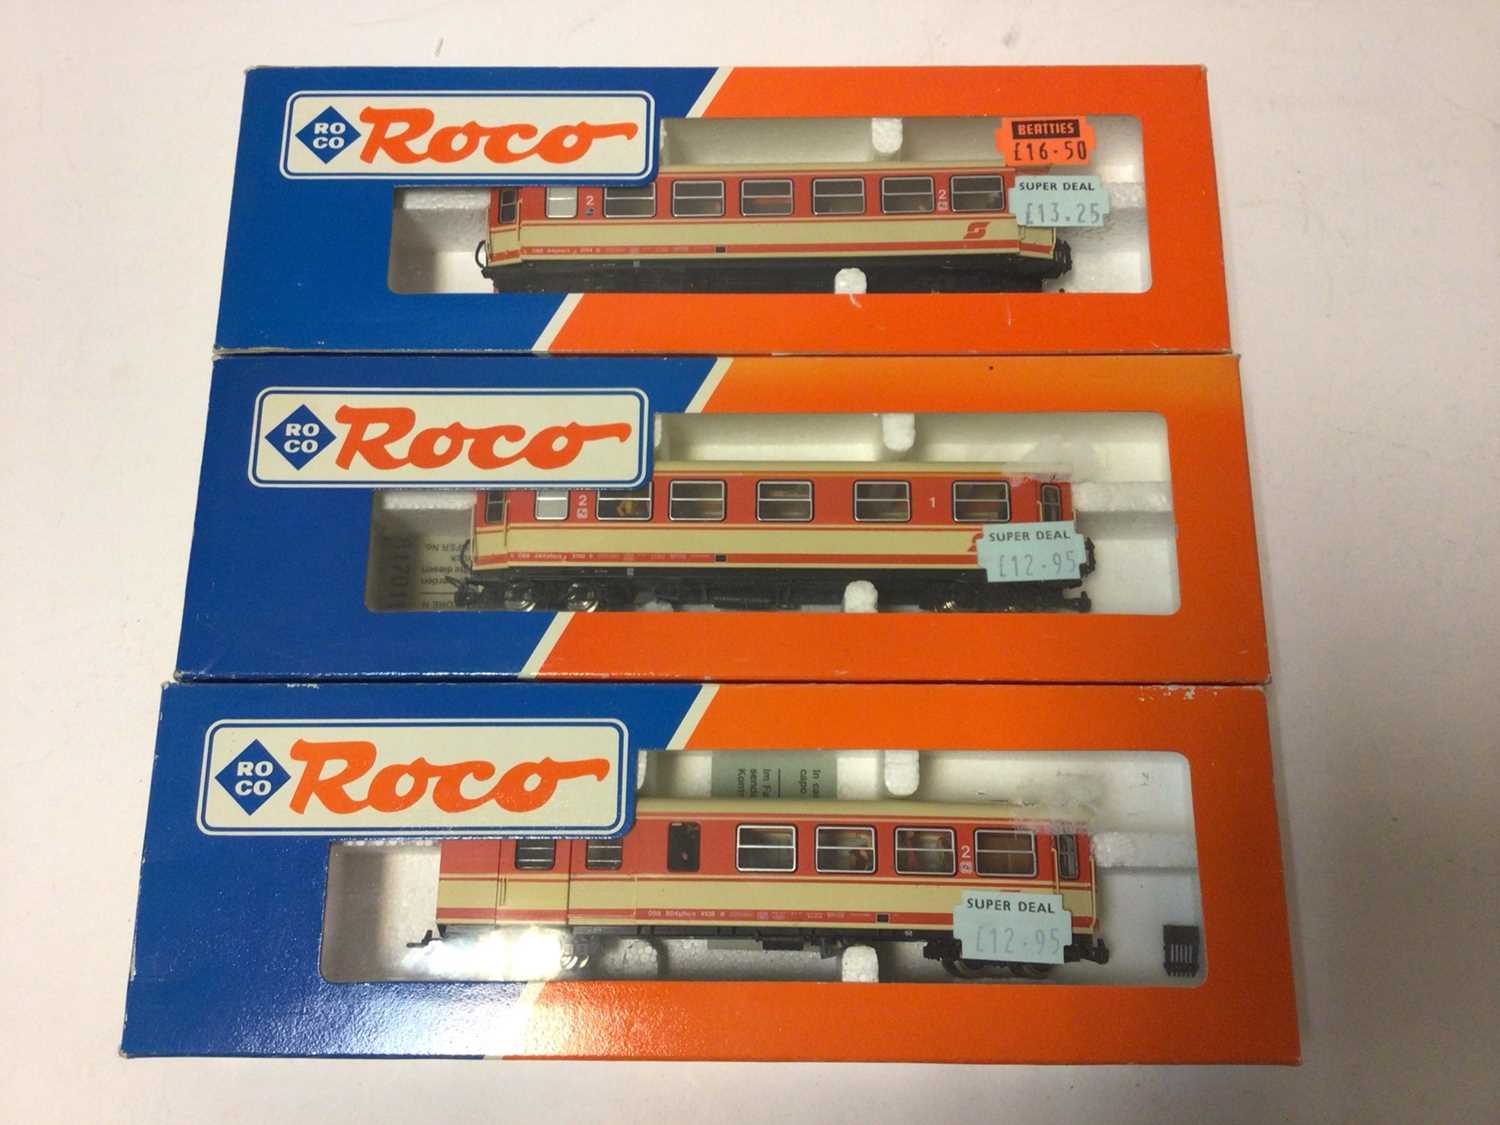 Rocco OBB Class 1099 007-5 Austrian Federal Railway locomotive No 33212, plus Roco OBB Class 1099 09 - Image 3 of 3